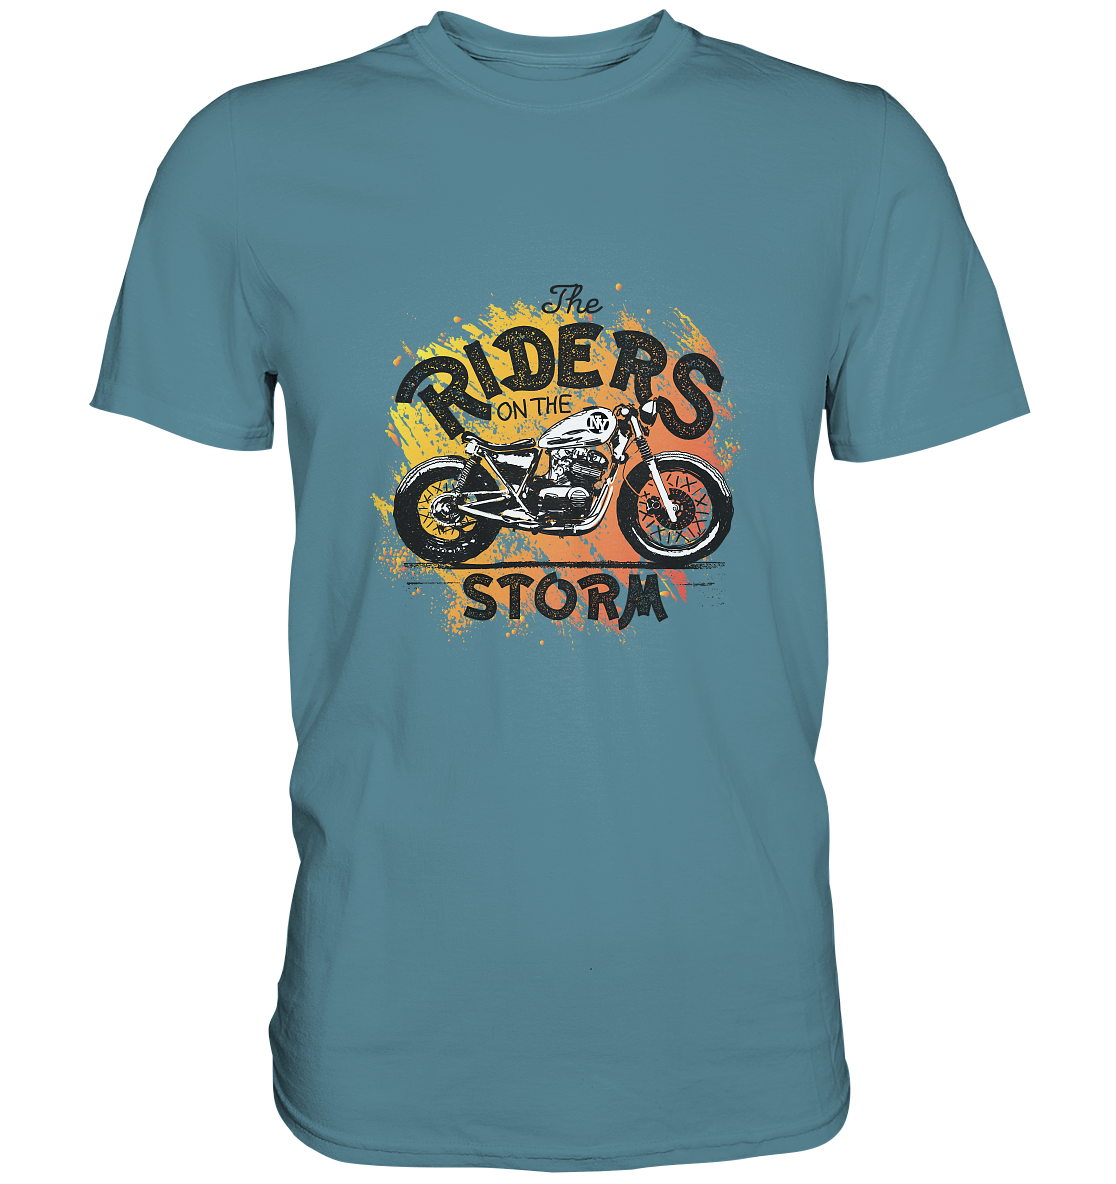 Riders on the storm - Premium Unisex Shirt - mehrere Farben